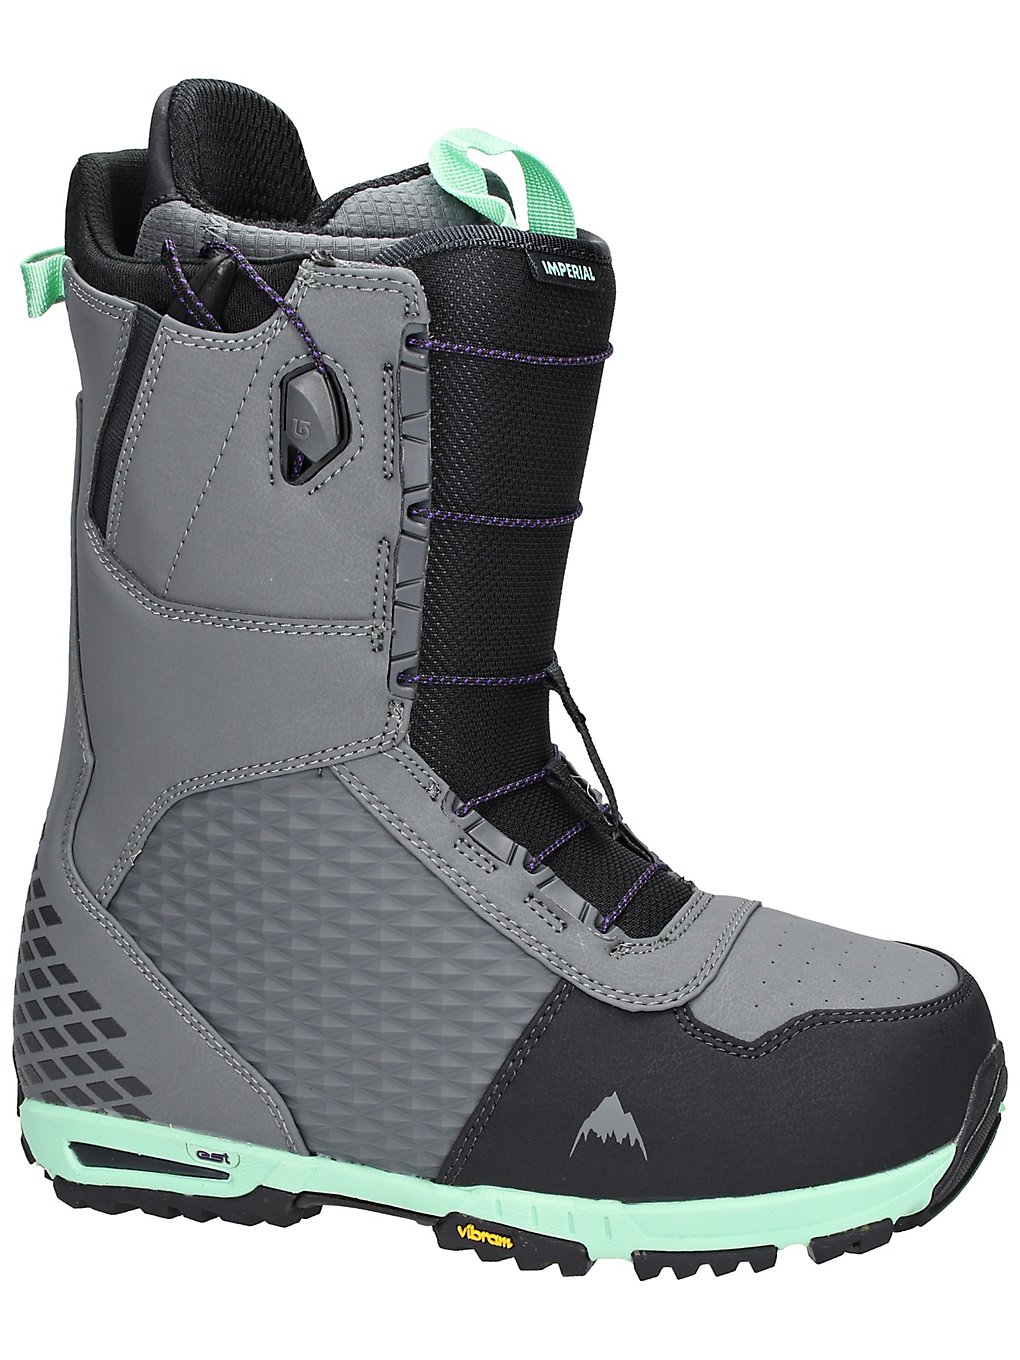 Burton Imperial Snowboard Boots gray/green